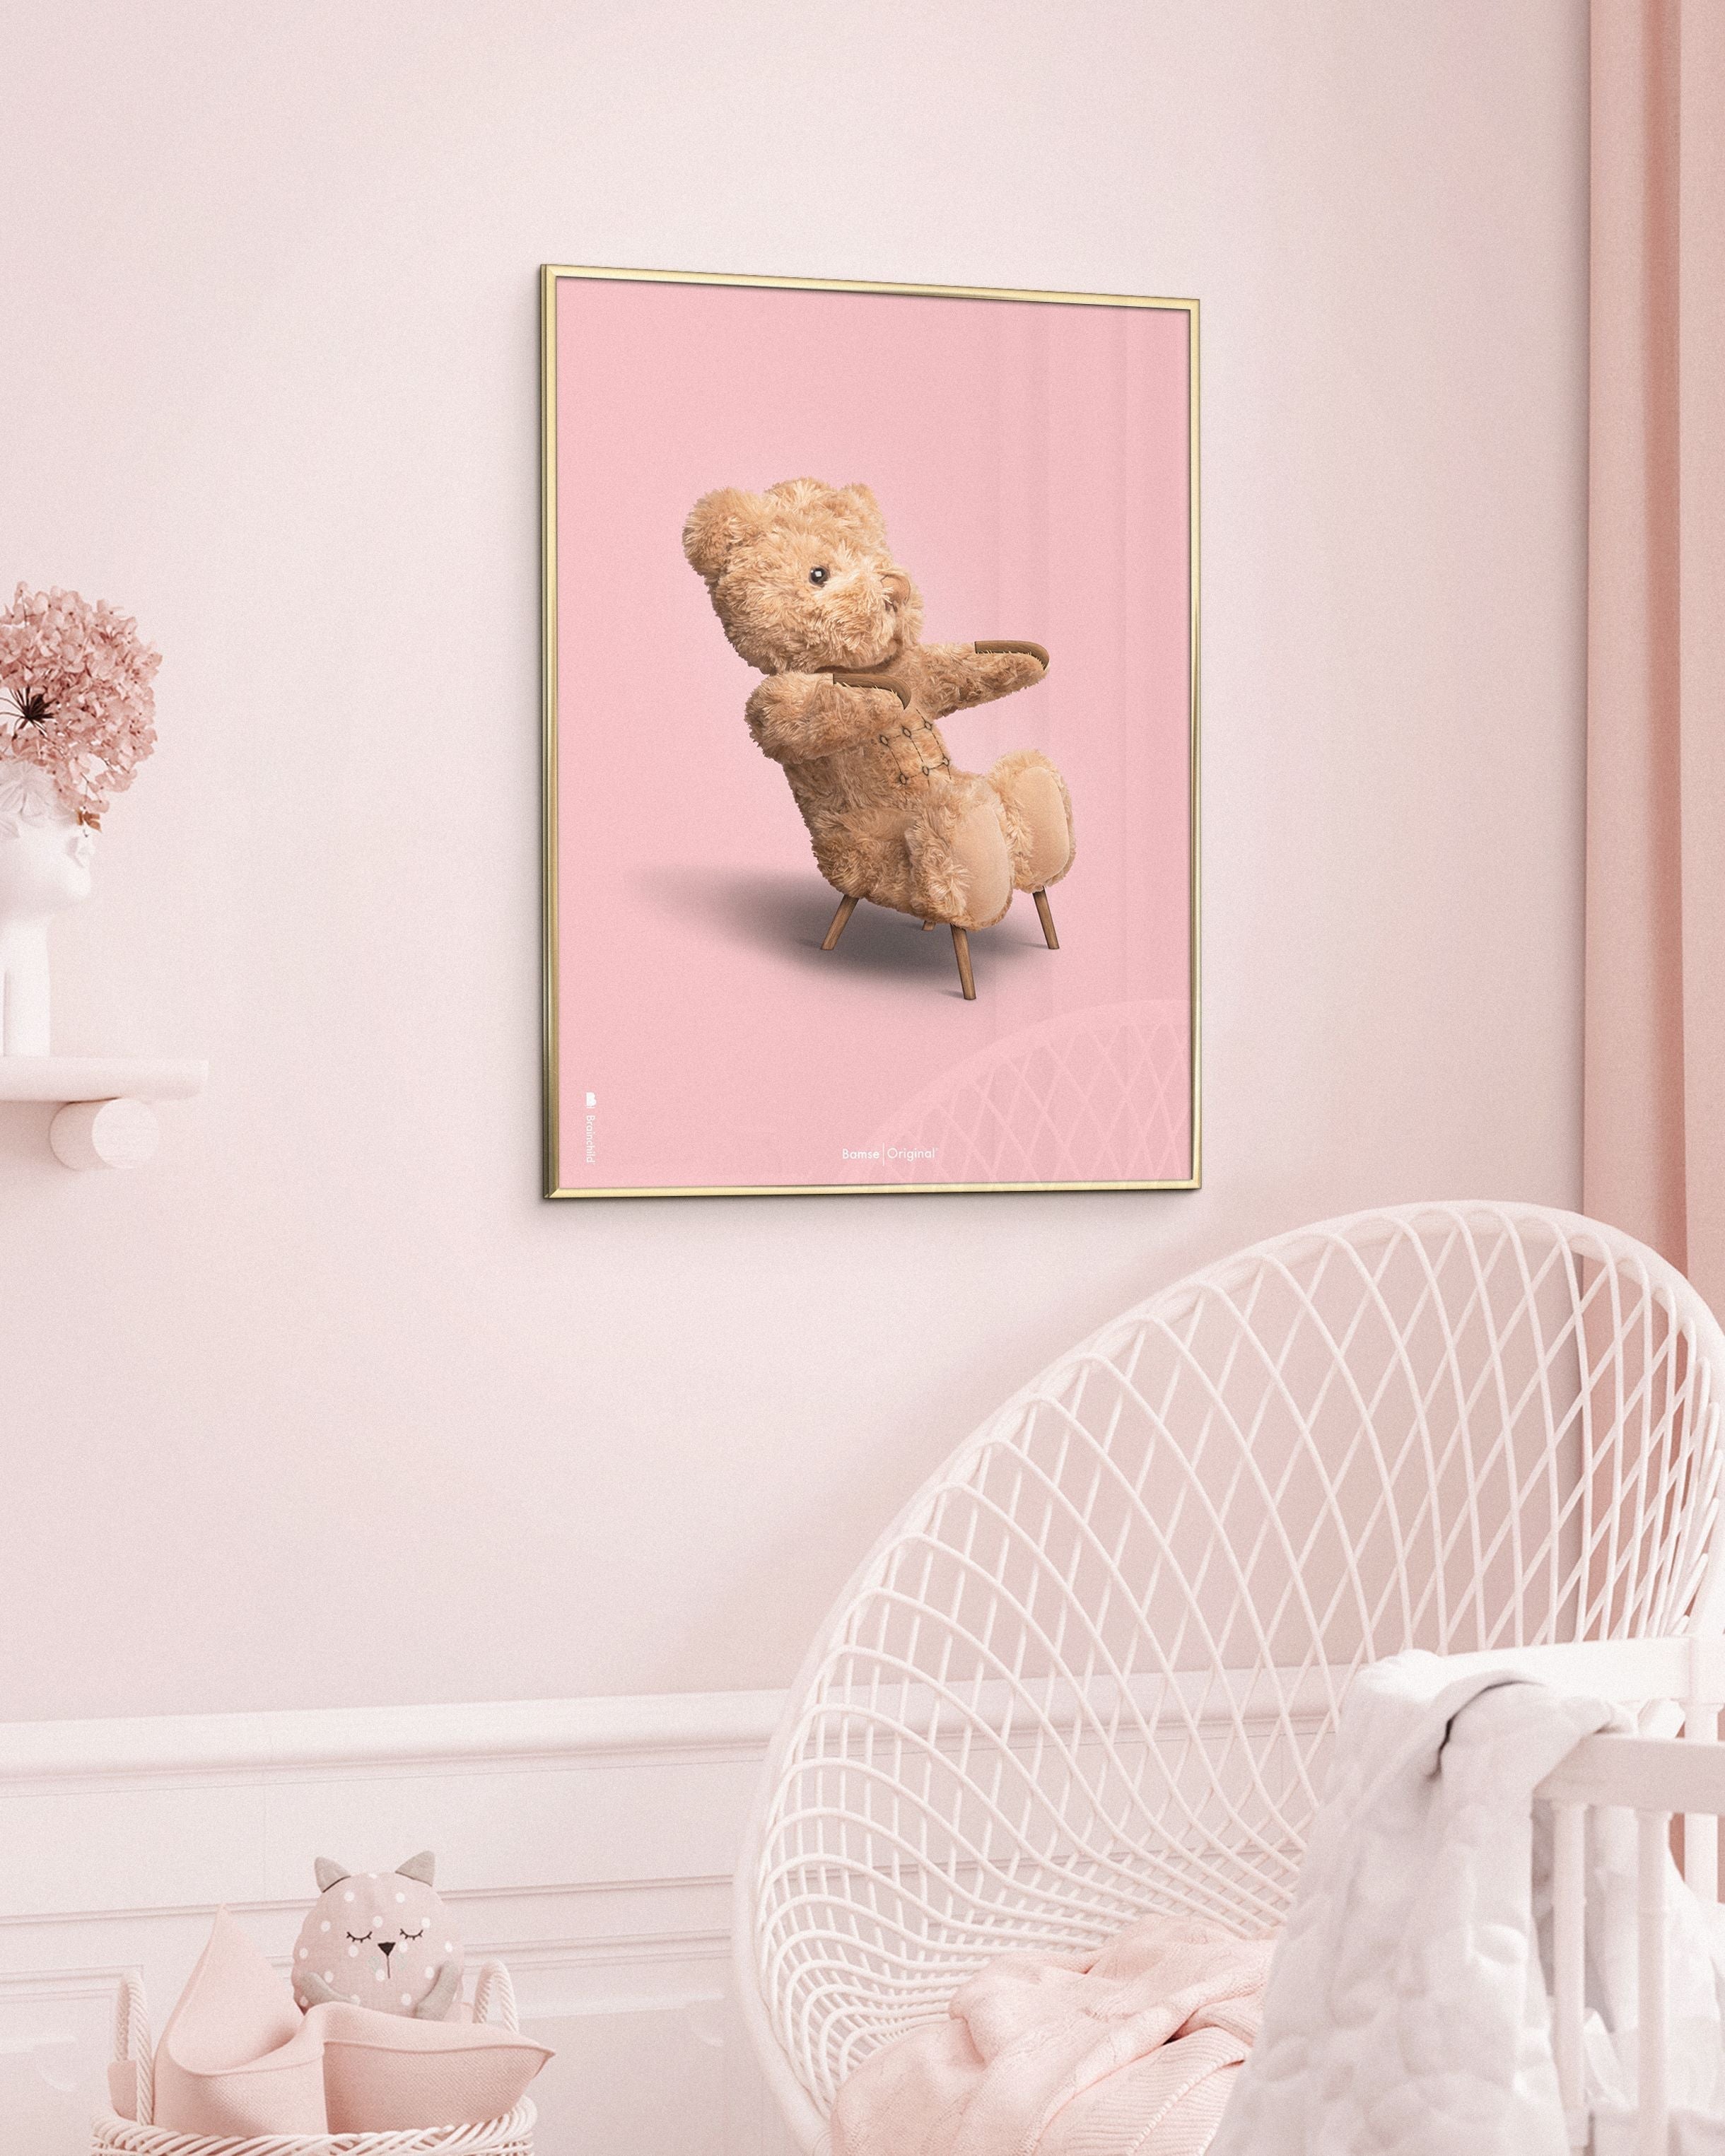 Brainchild Nallebjörn klassisk affisch mörk träram ram a5, rosa bakgrund